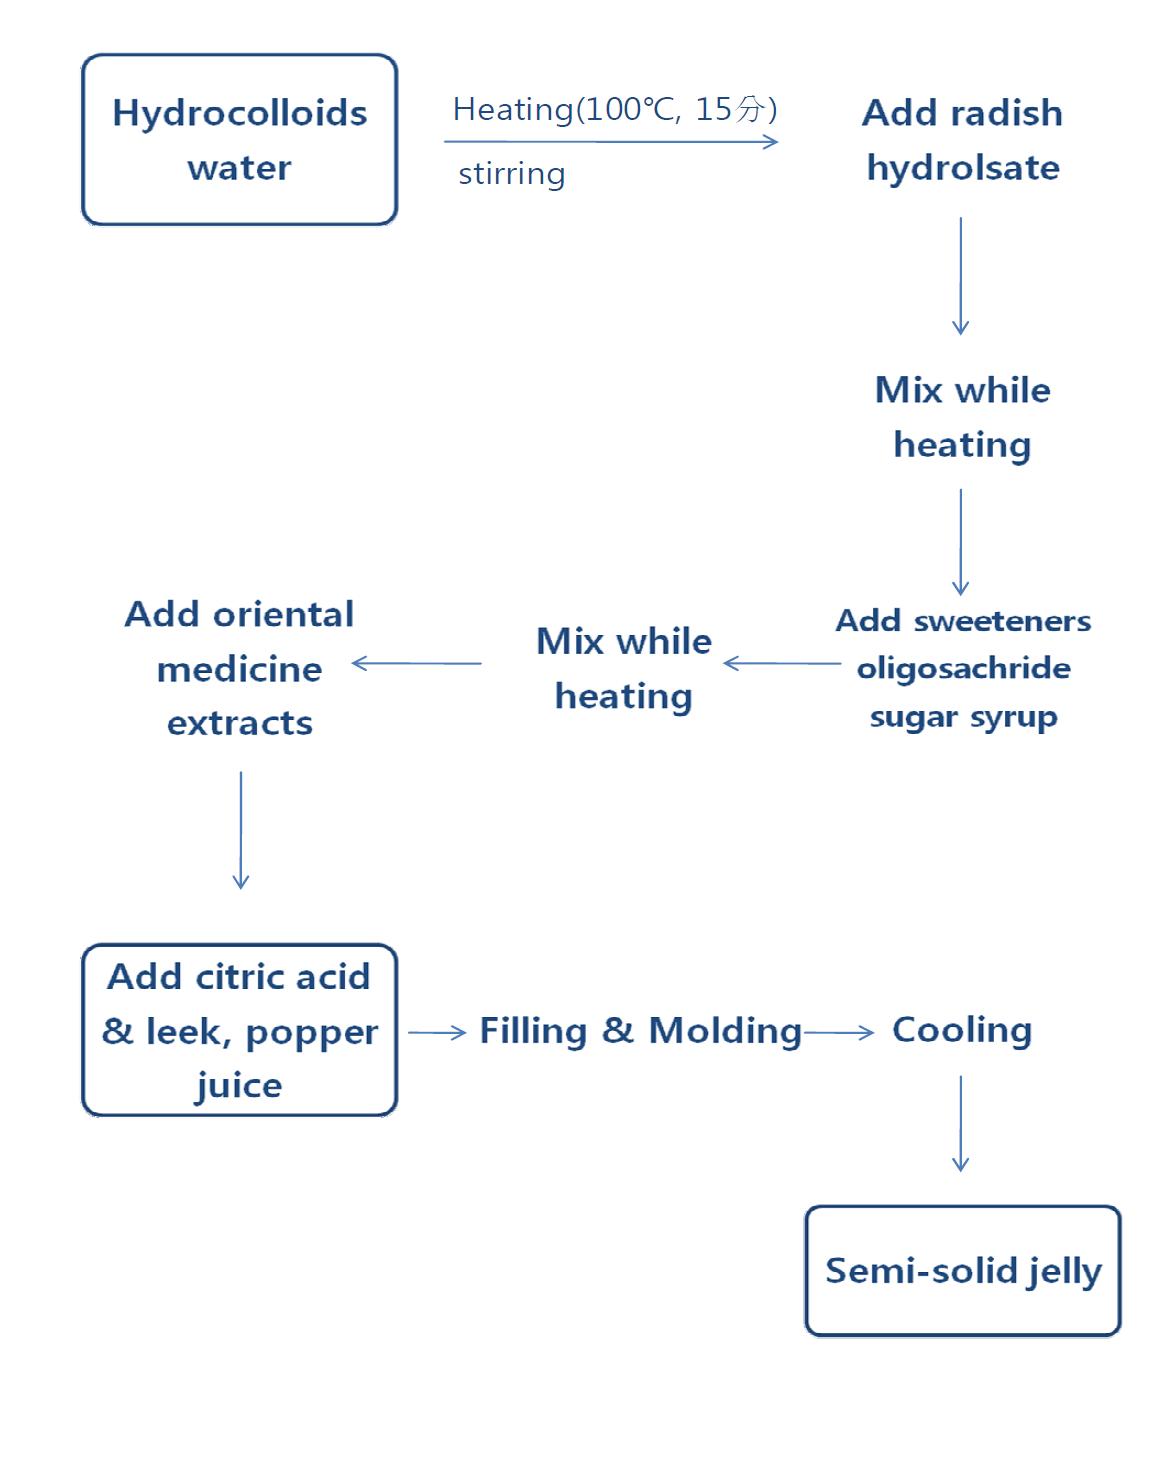 Preparation of semi-solid jelly using the radish hydrolysate